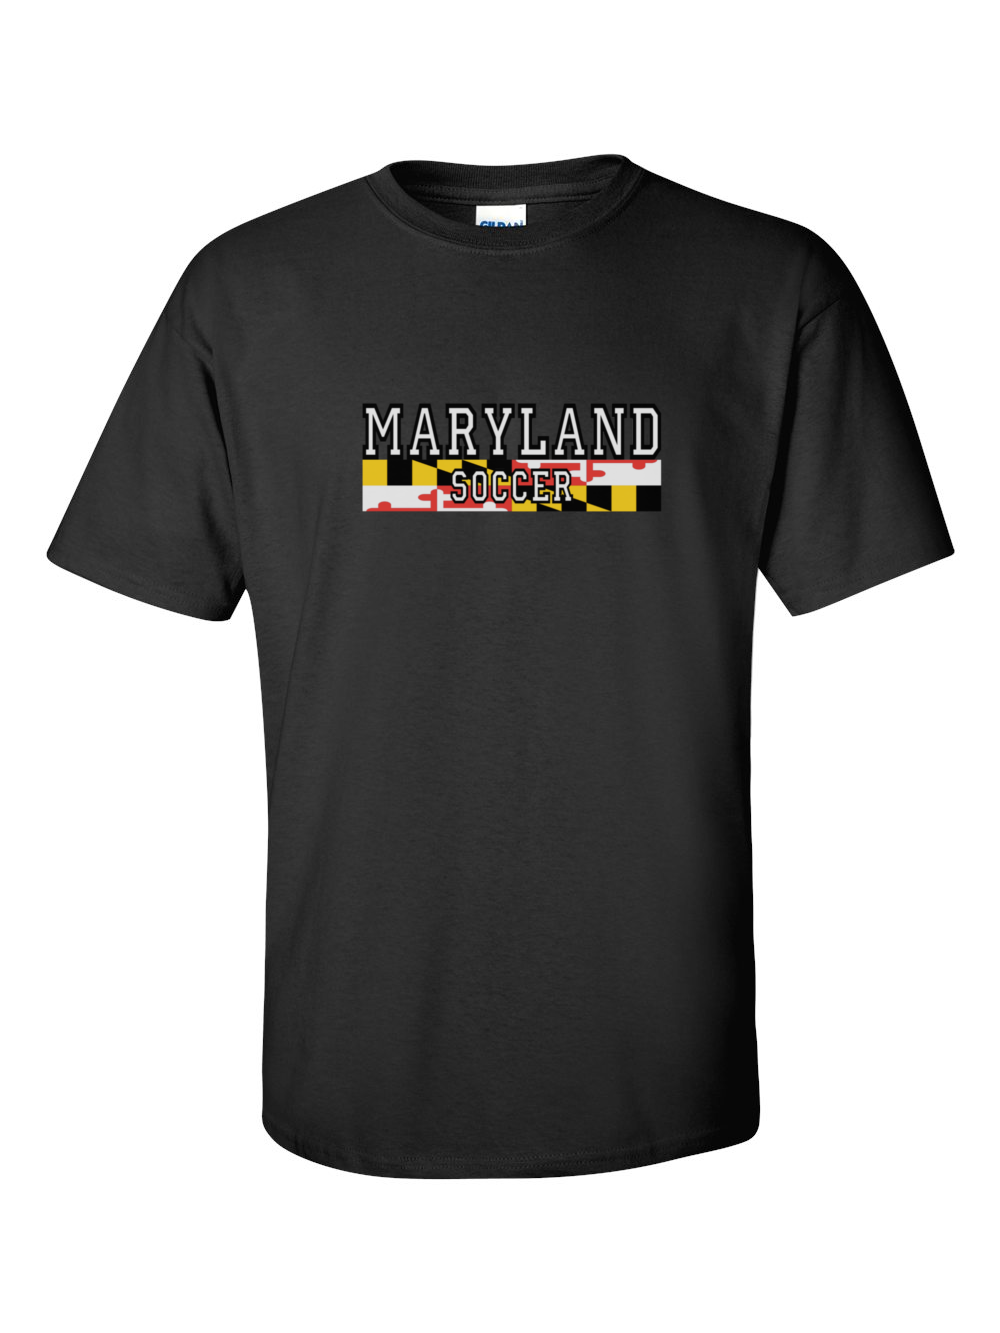 Maryland Soccer T-Shirt (Black)